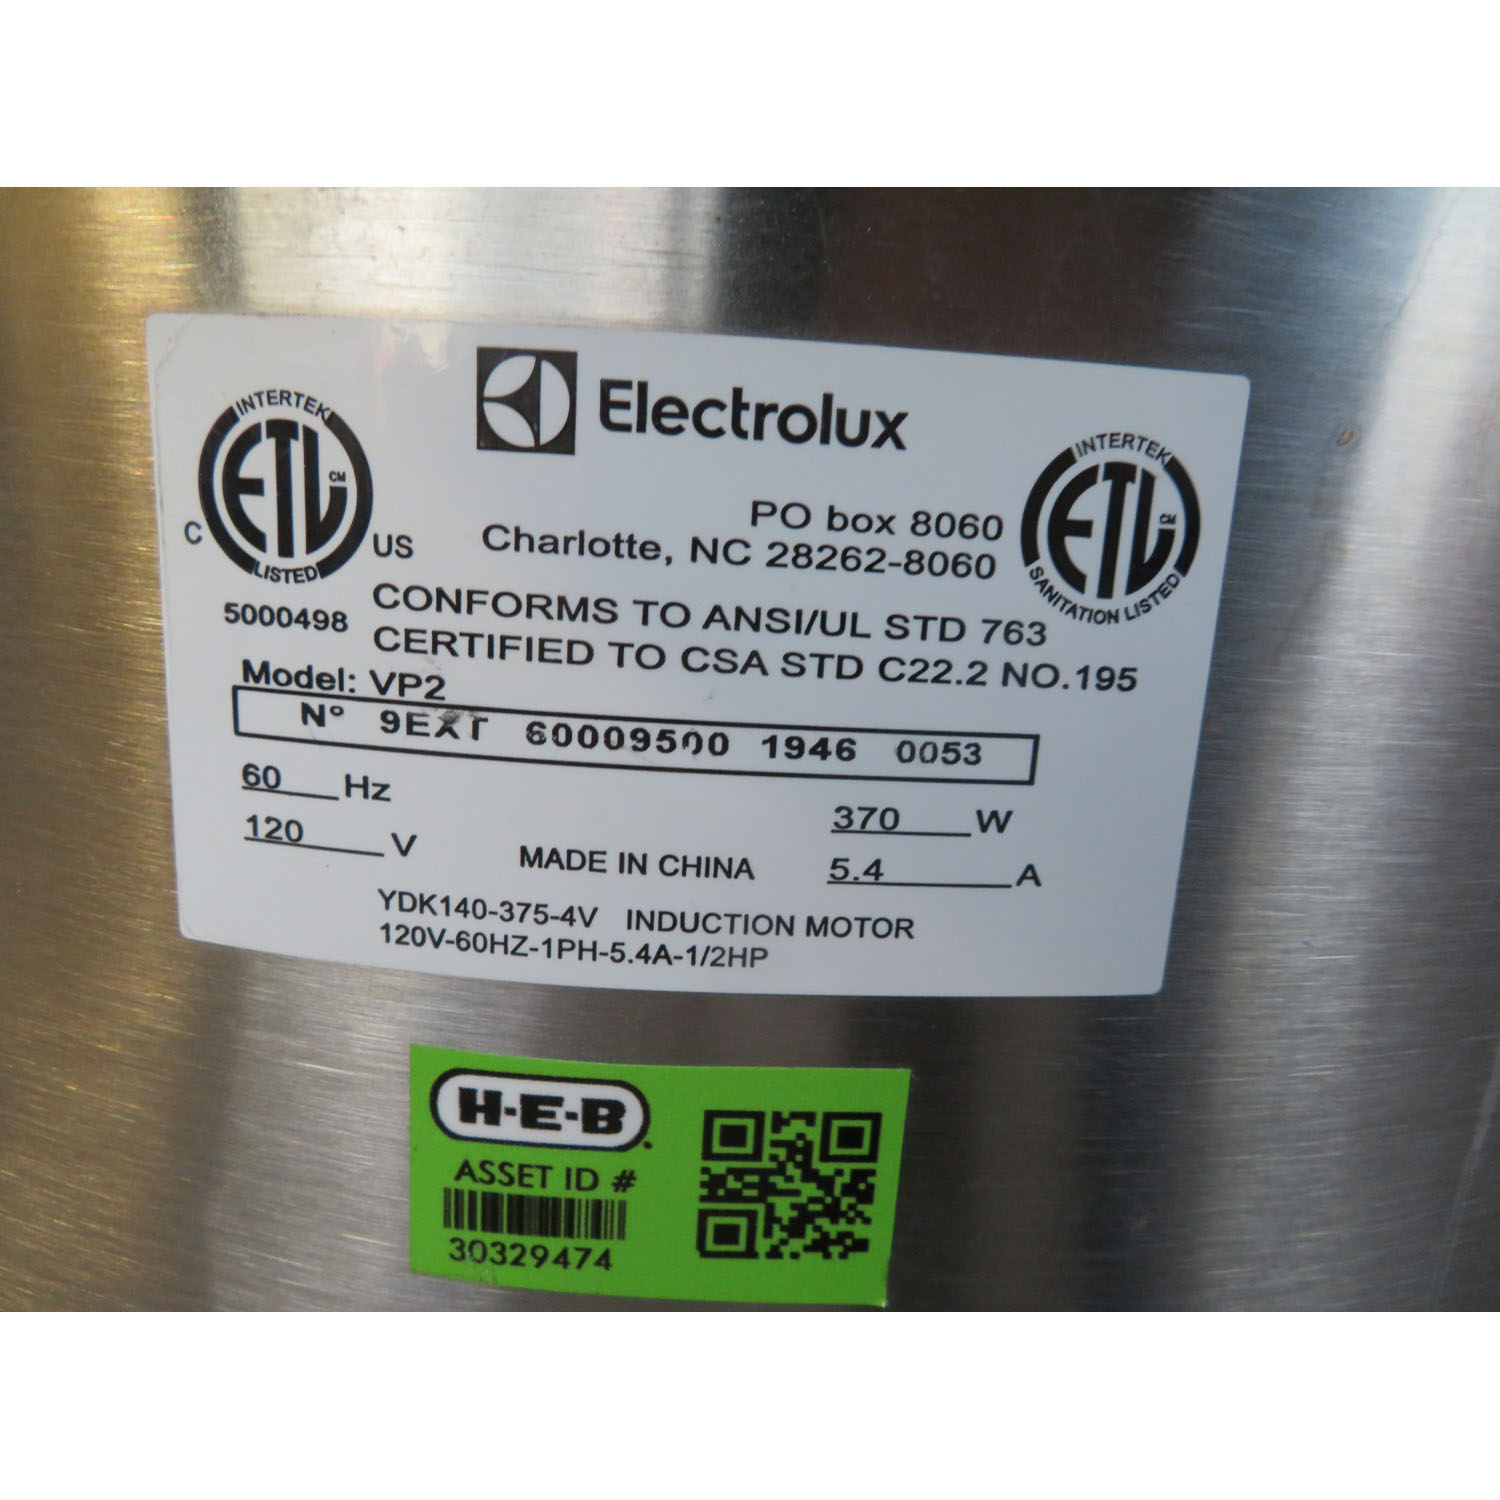 Electrolux VP2 Salad/Vegetable Dryer, Used Excellent Condition image 4